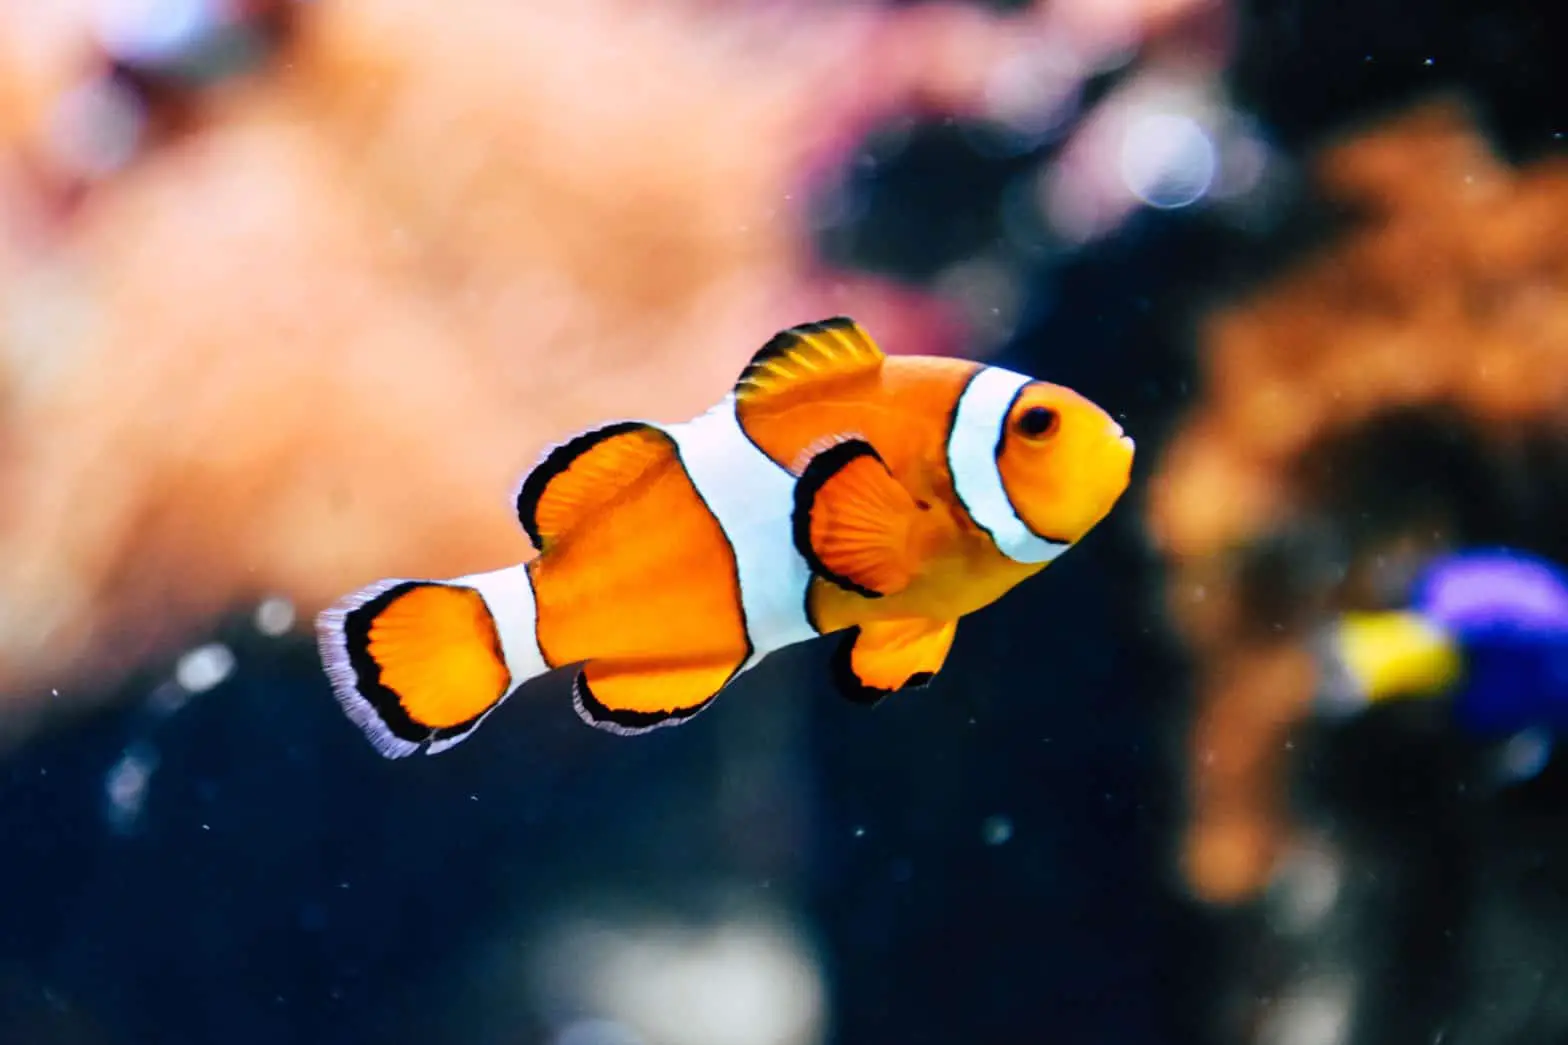 A swimming Diseases free clown fish